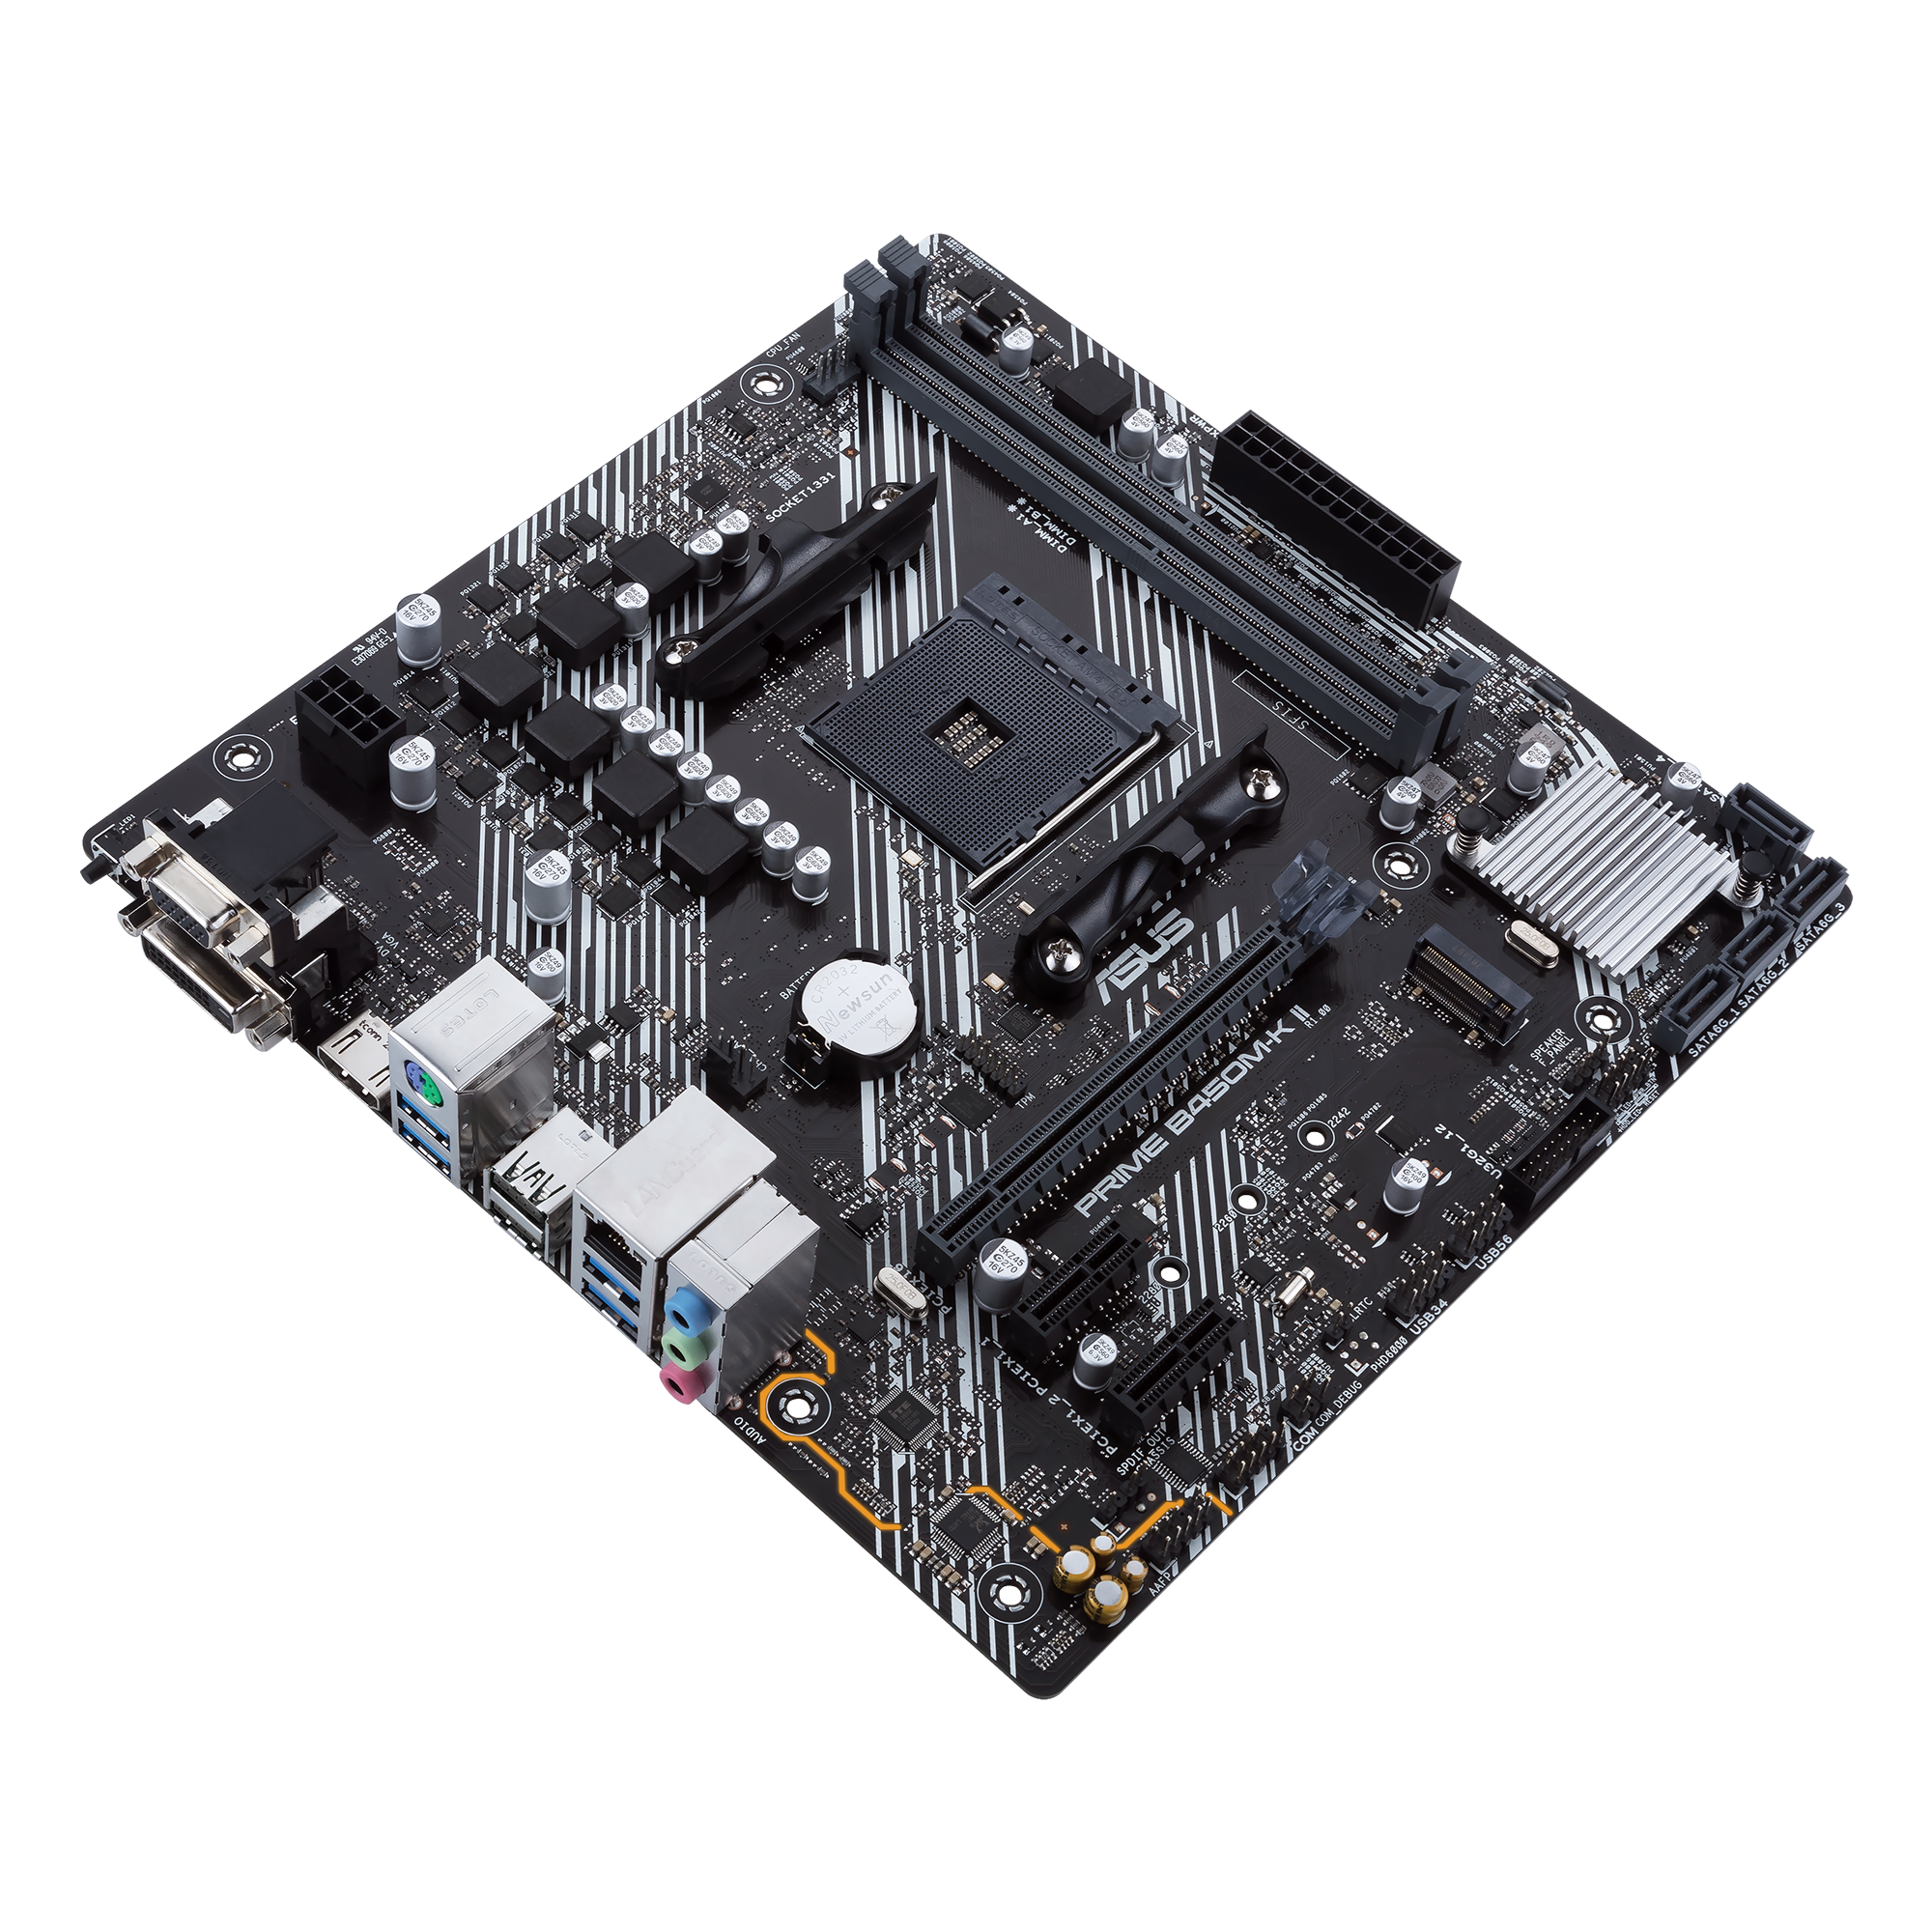 ASUS Prime B450M-K II AM4 Gaming Motherboard – EasyPC